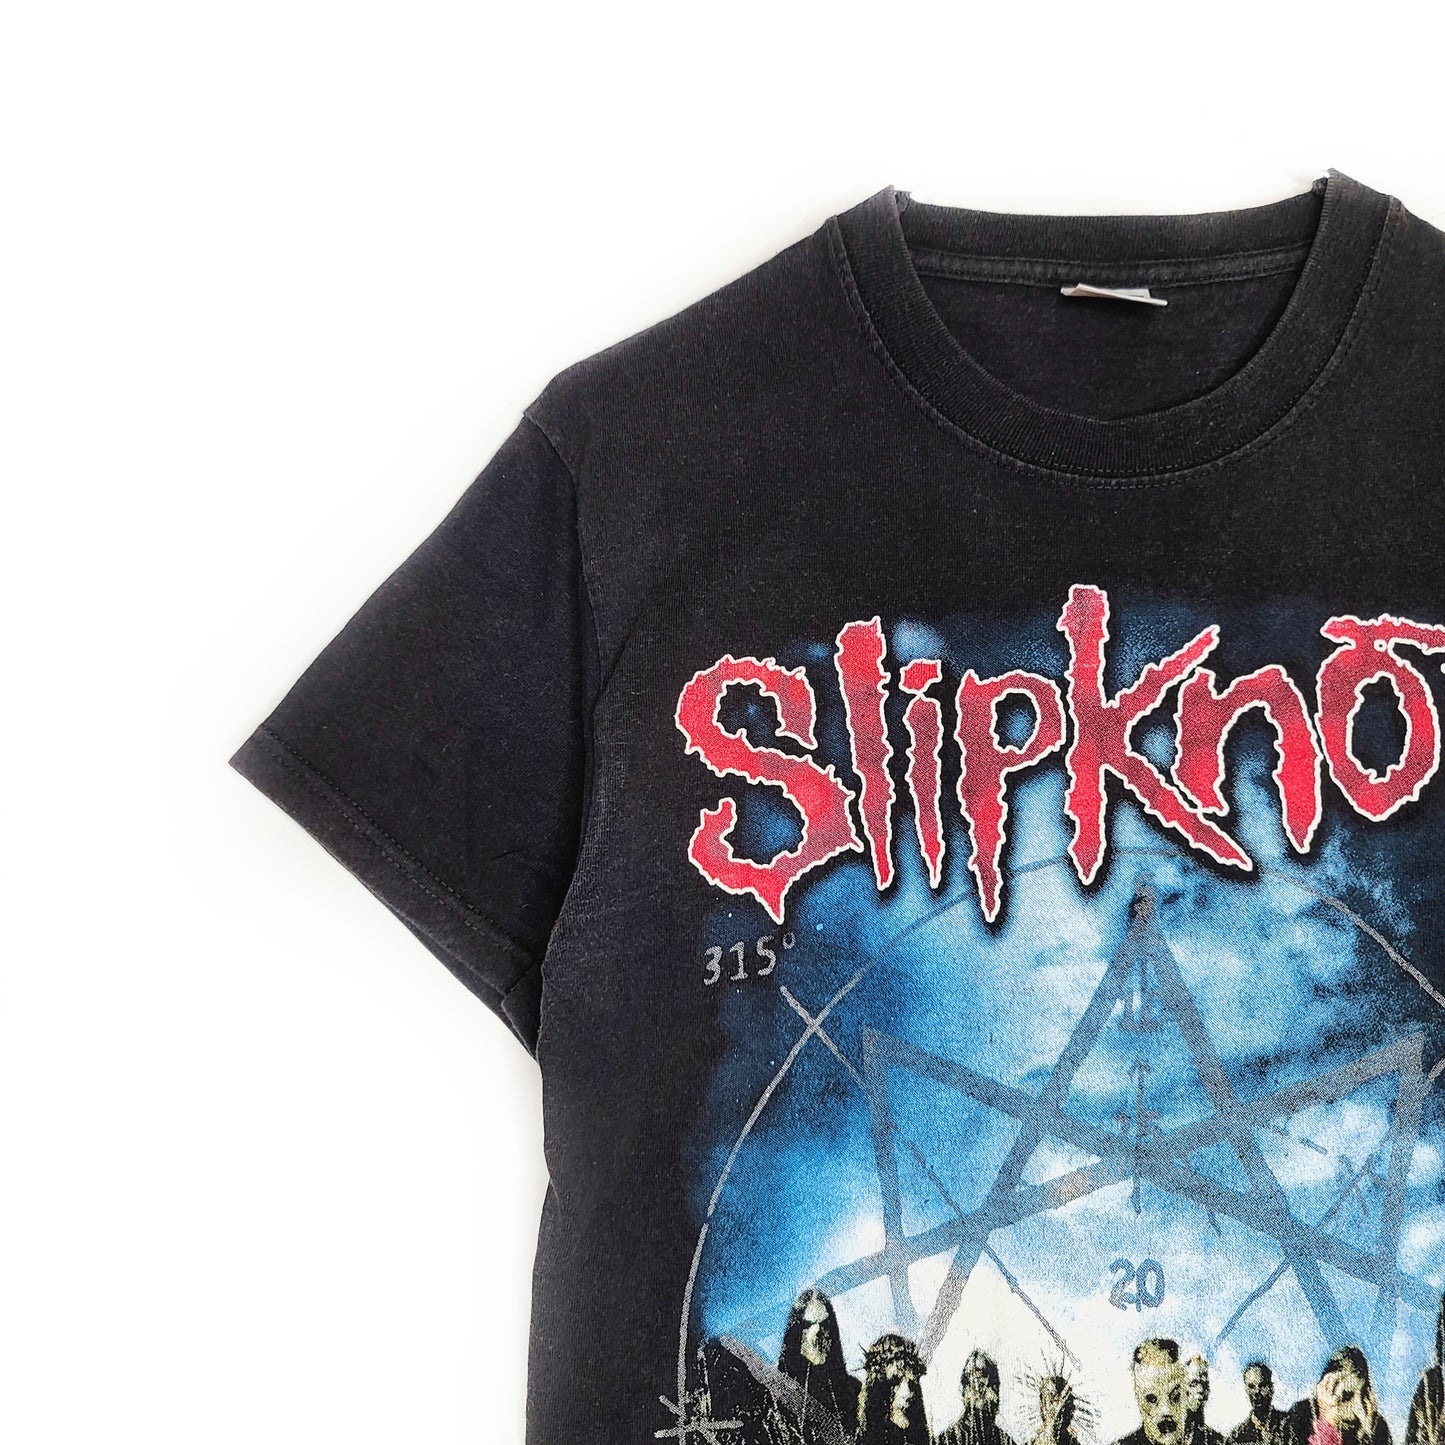 Tshirt vintage Slipknot - zimfriperie